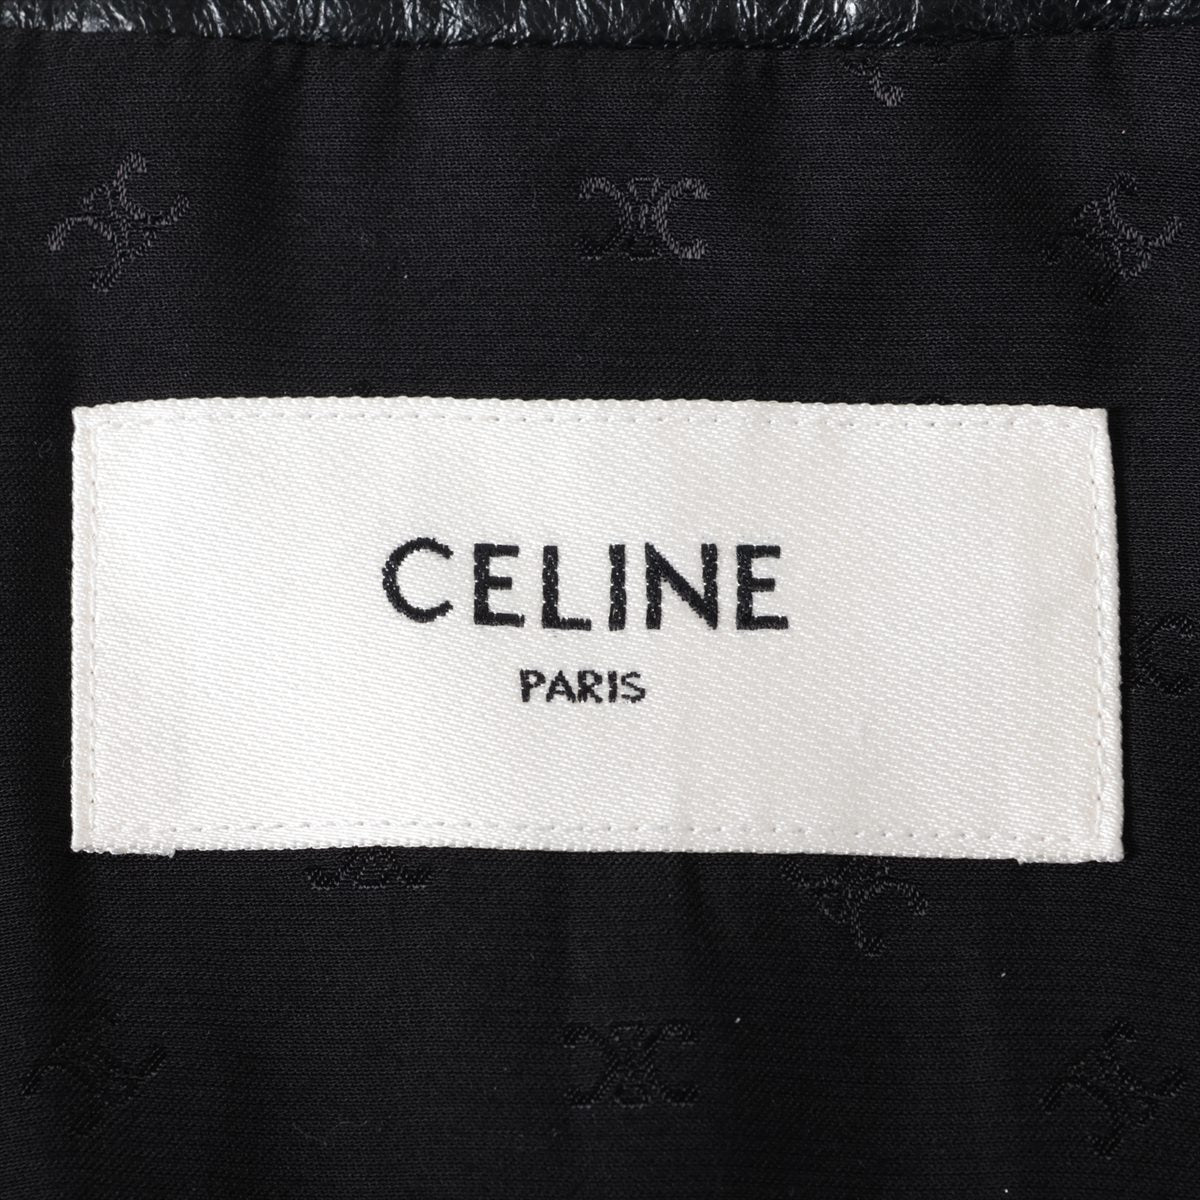 CELINE Triomphe Goatskin Leather jacket 36 Ladies' Black  2F191657E Eddie period